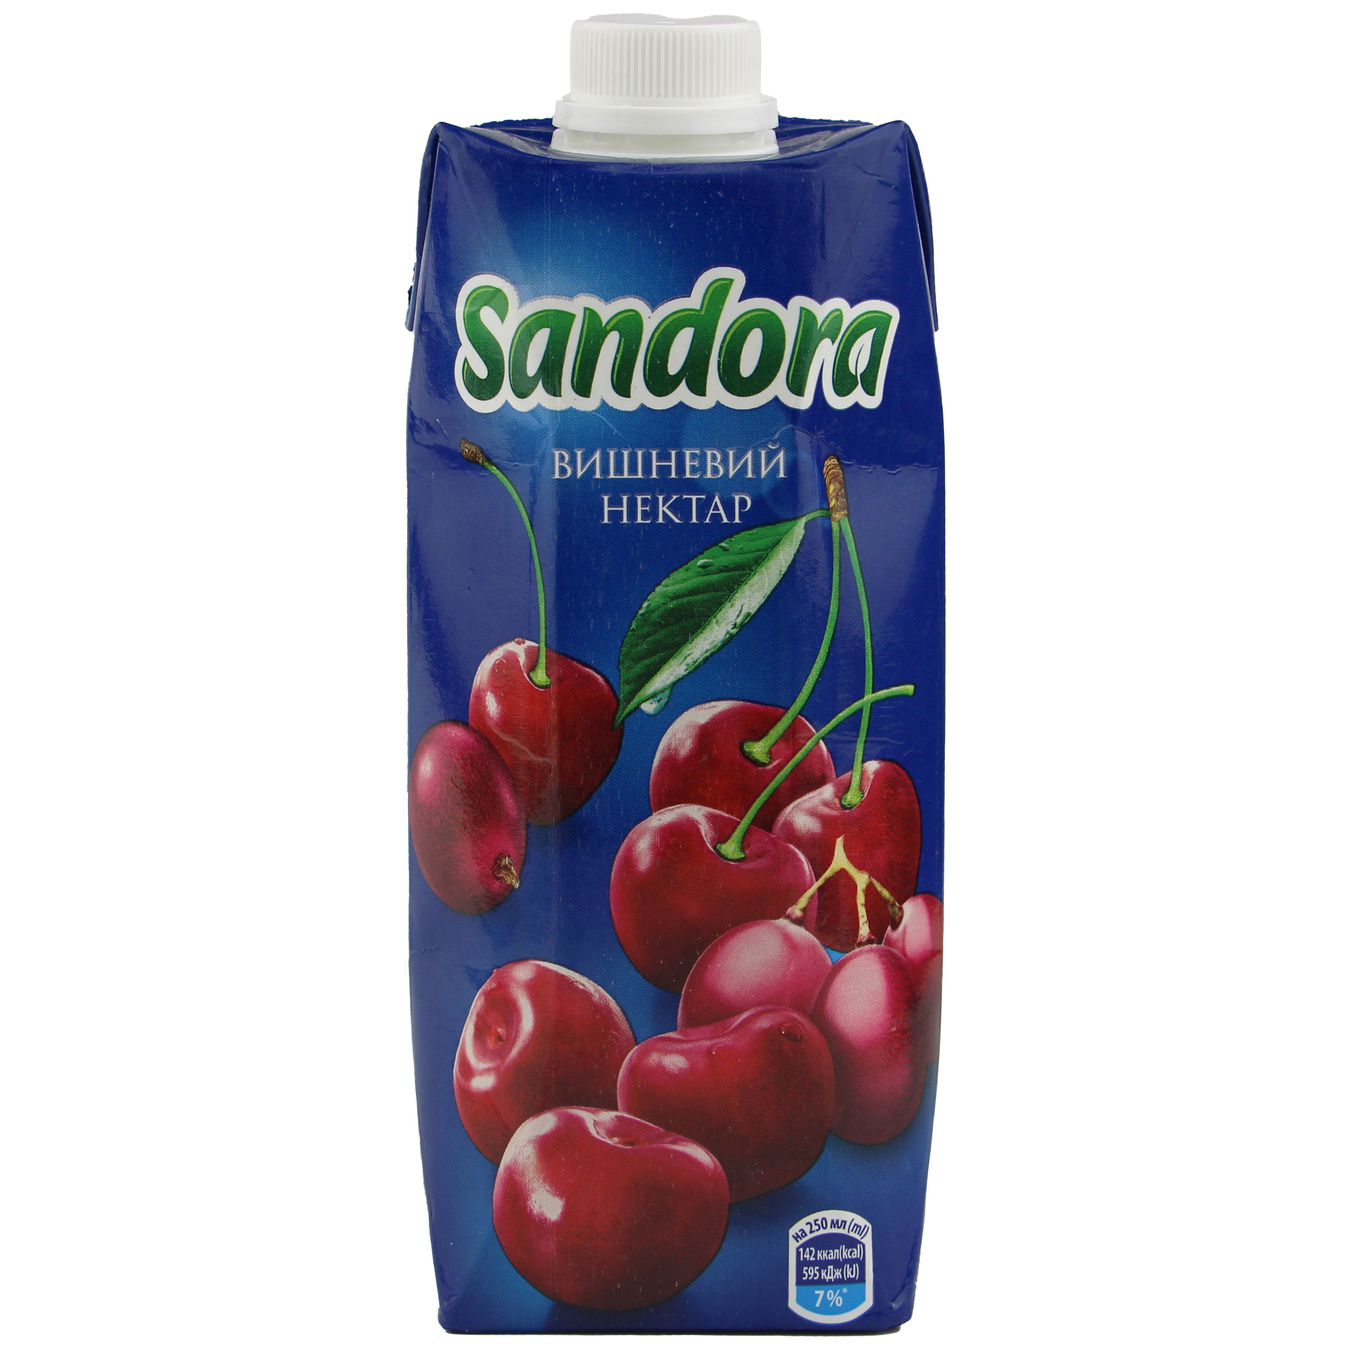 Sandora Cherry Nectar 0,5l